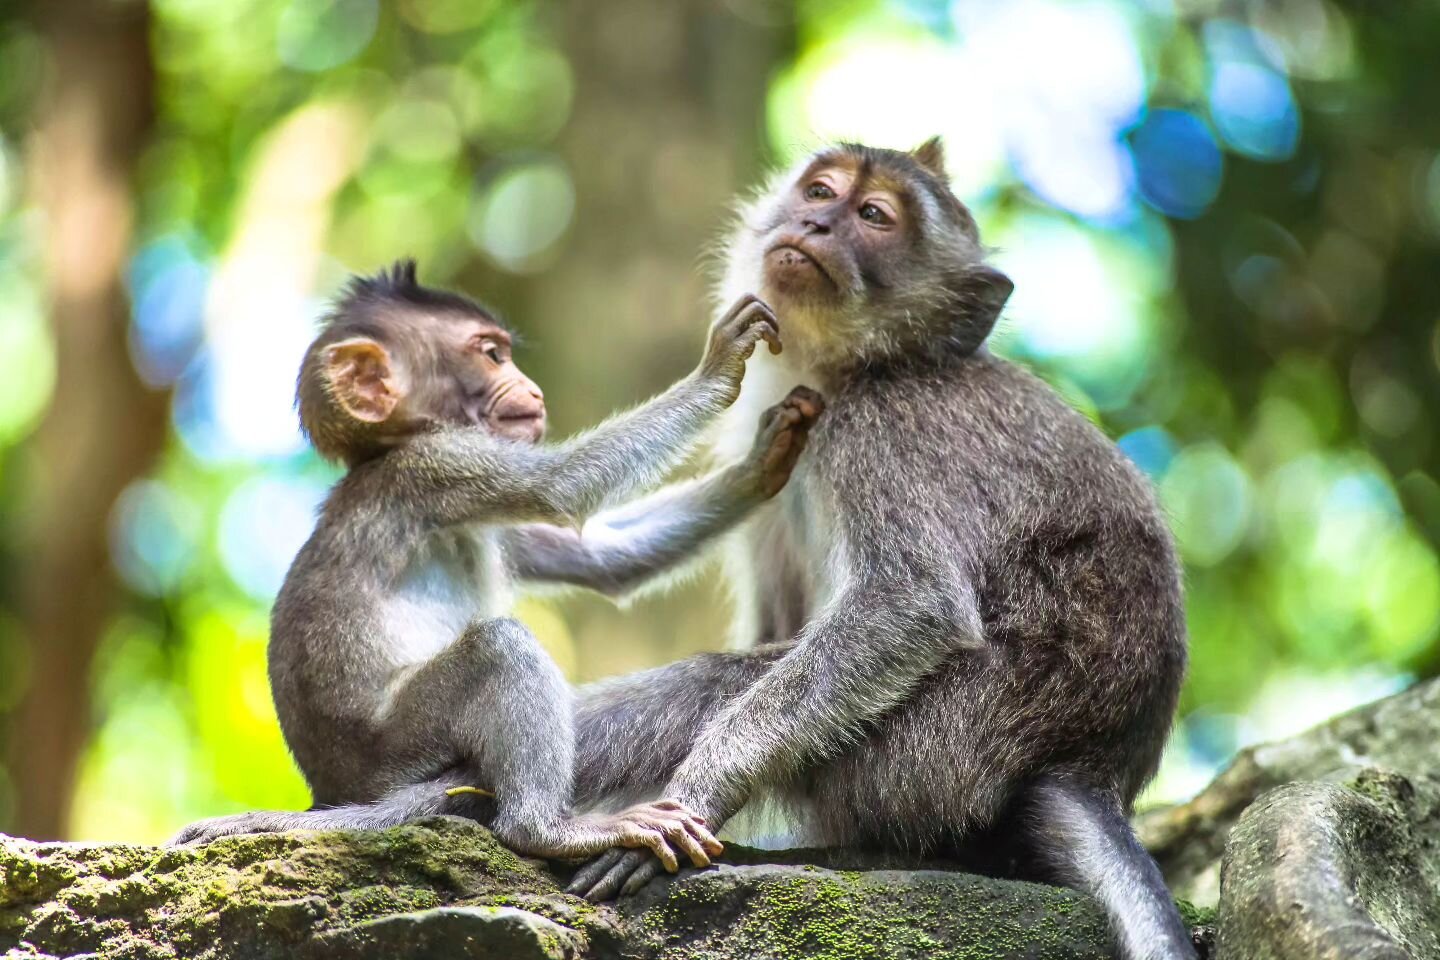 Monkey business 🐵😎
🇮🇩 Bali, Indonesia 2013.
.
.
.
.
.
.
.
.
#travel #travelphotography #monkeytemple #bali #travelingthroughtheworld #colorphotography #awesomeearth #photography #travelasia #beauty #ig_photooftheday #photooftheday #island #postca